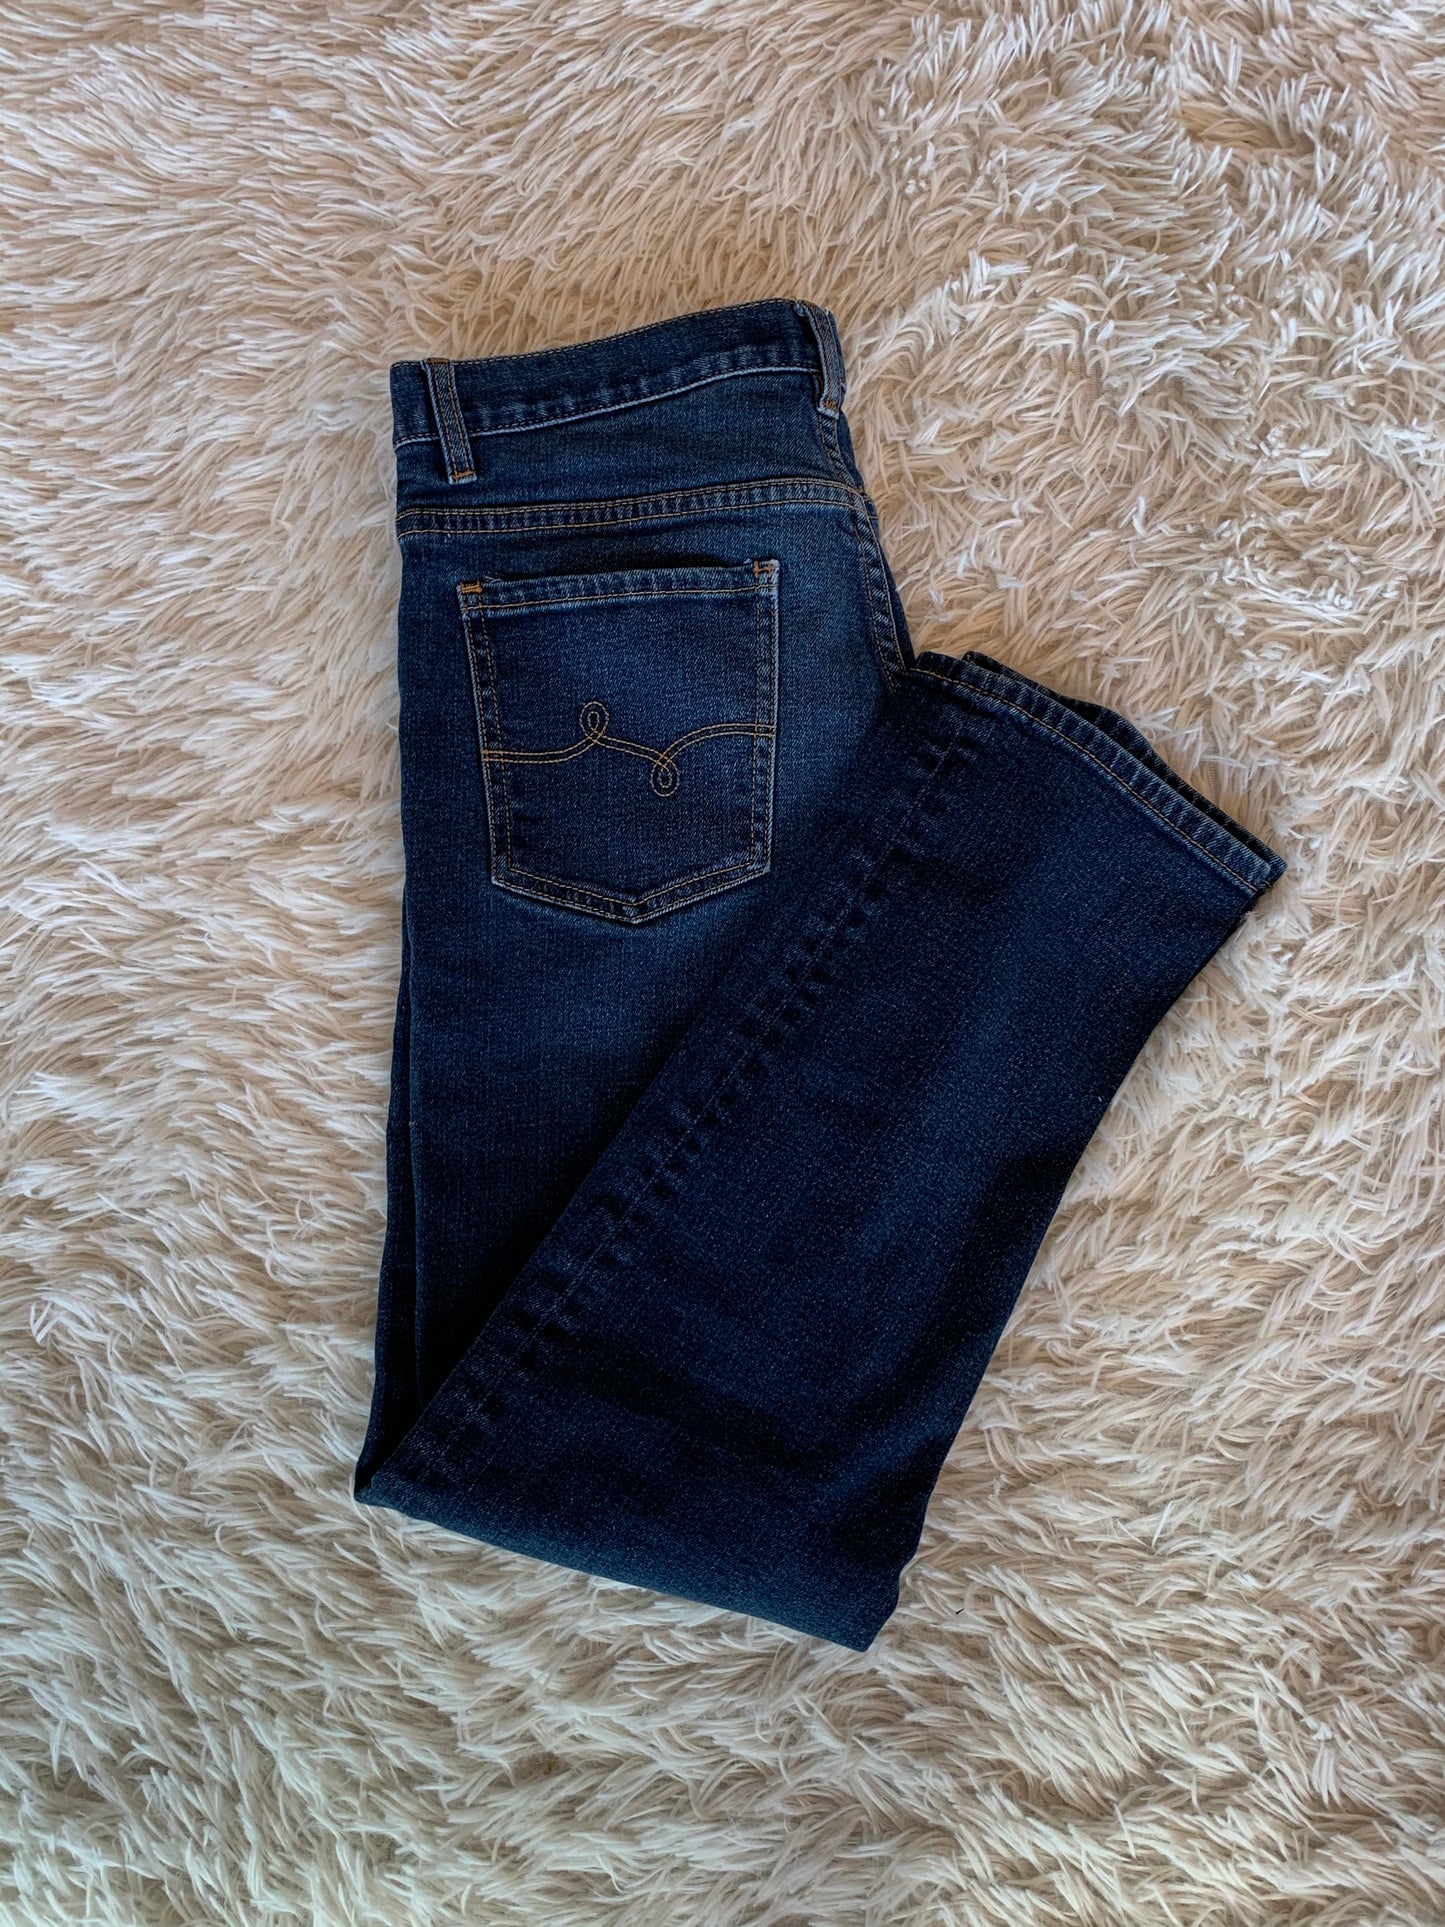 LRG Straight Fit Jeans Blue - 34 x 28